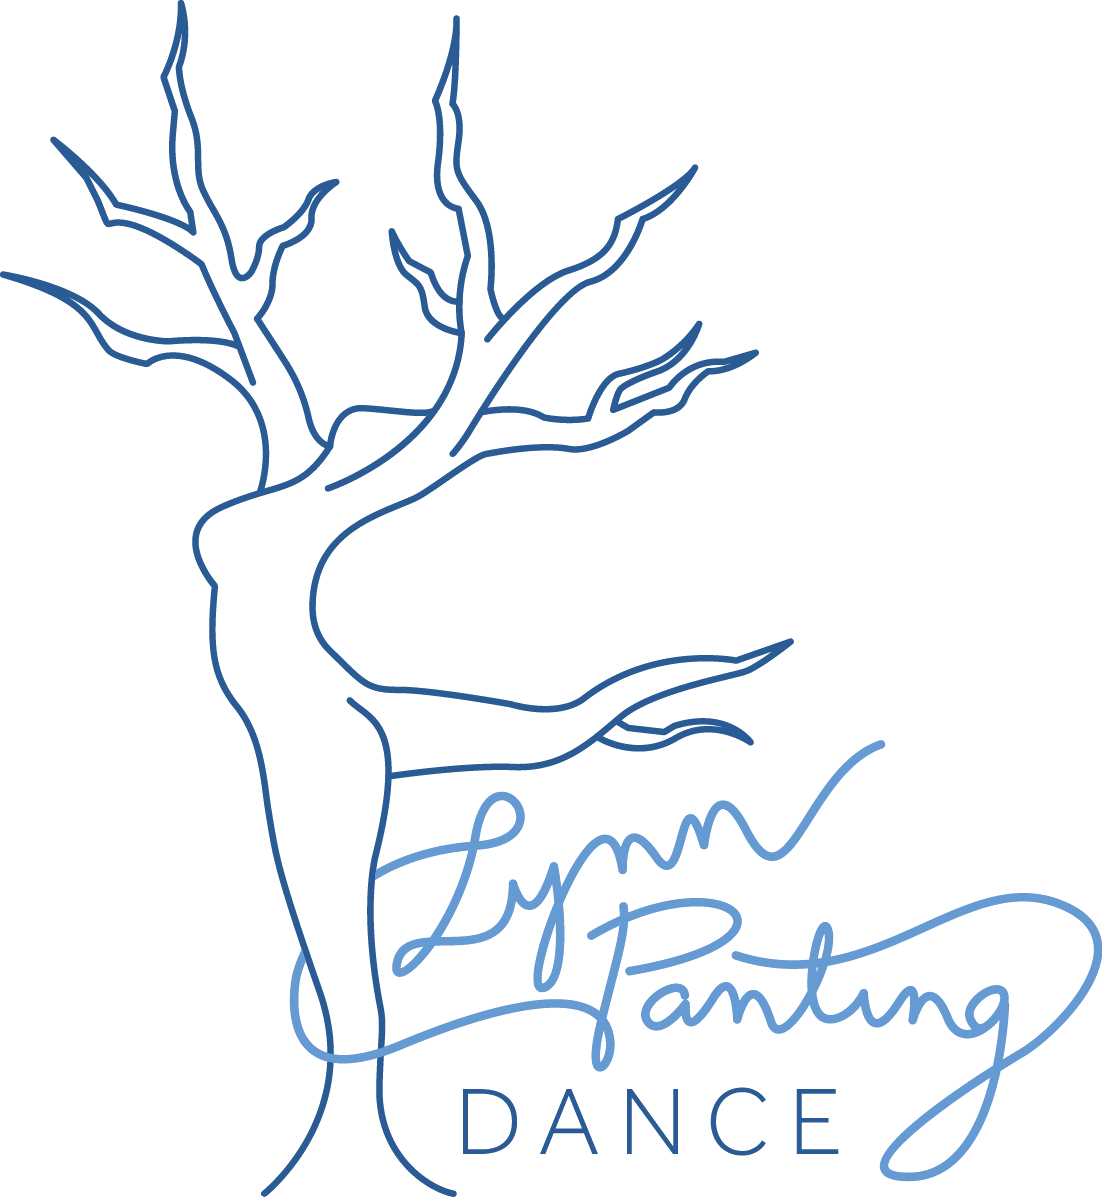 Lynn Panting Dance 